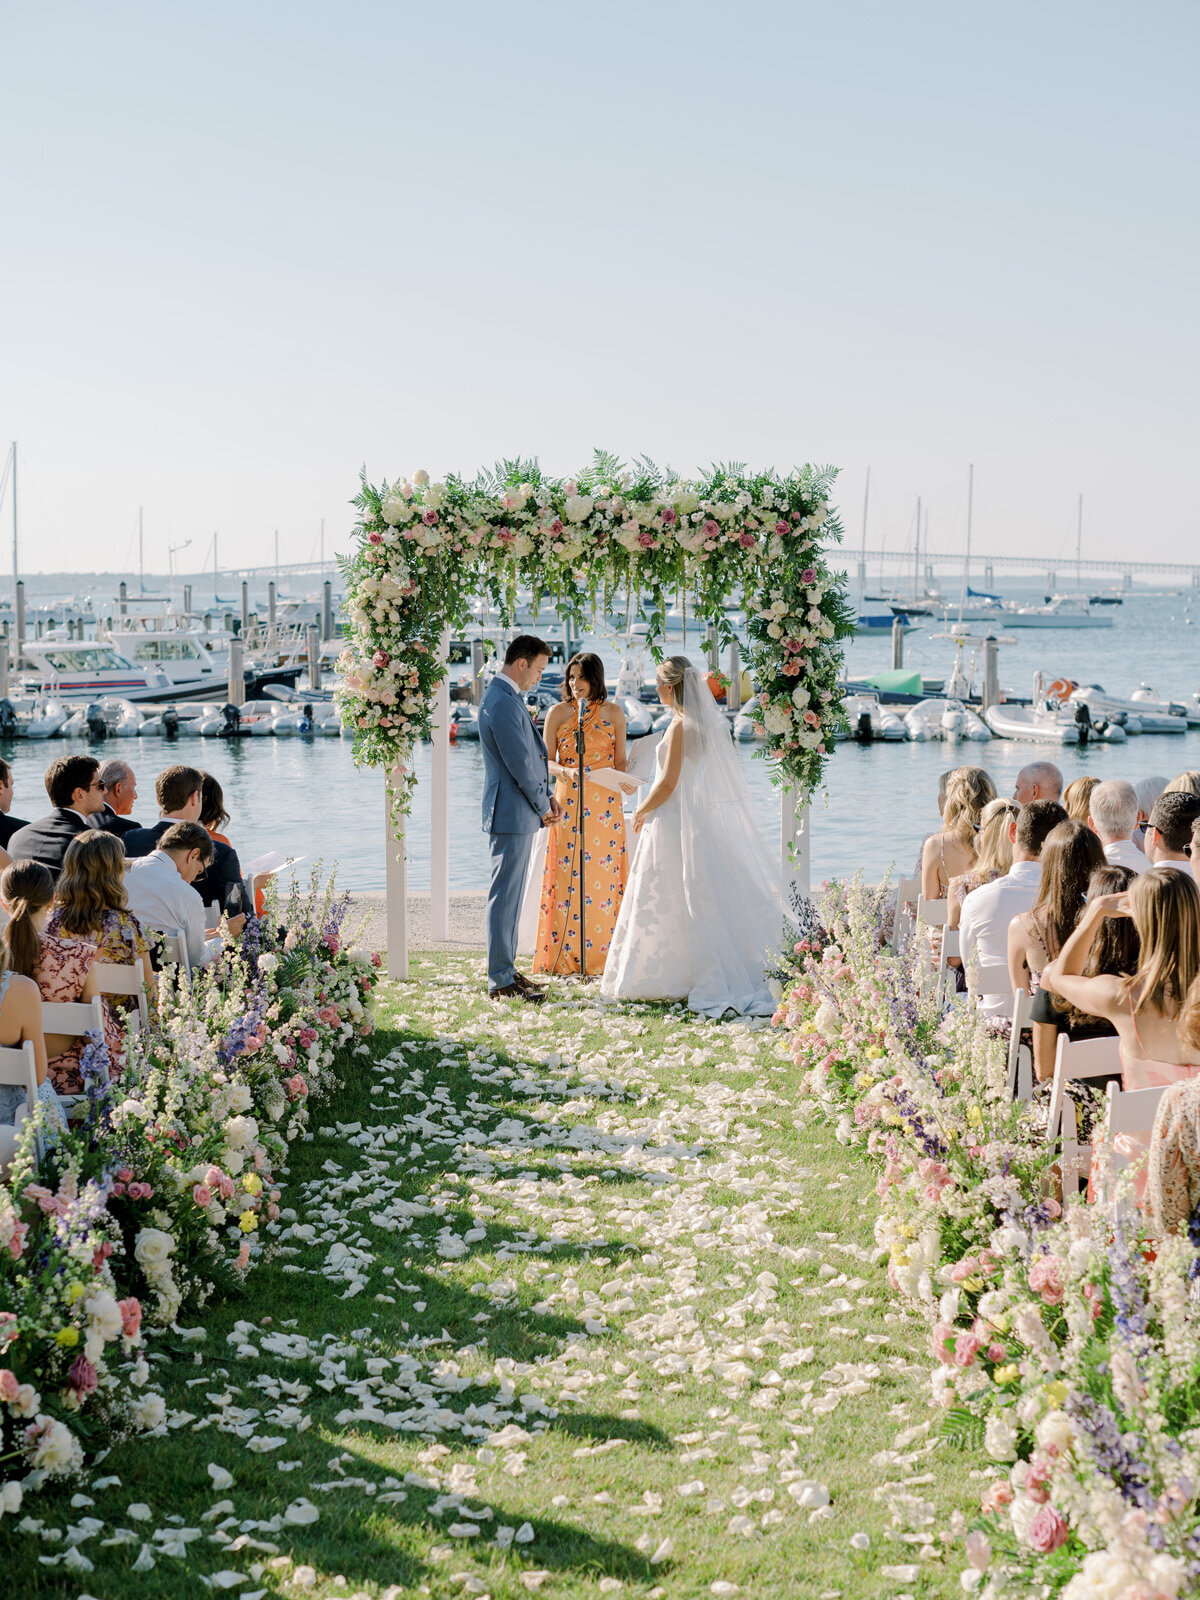 Kate-Murtaugh-Events-wedding-ceremony-vows-Newport-RI